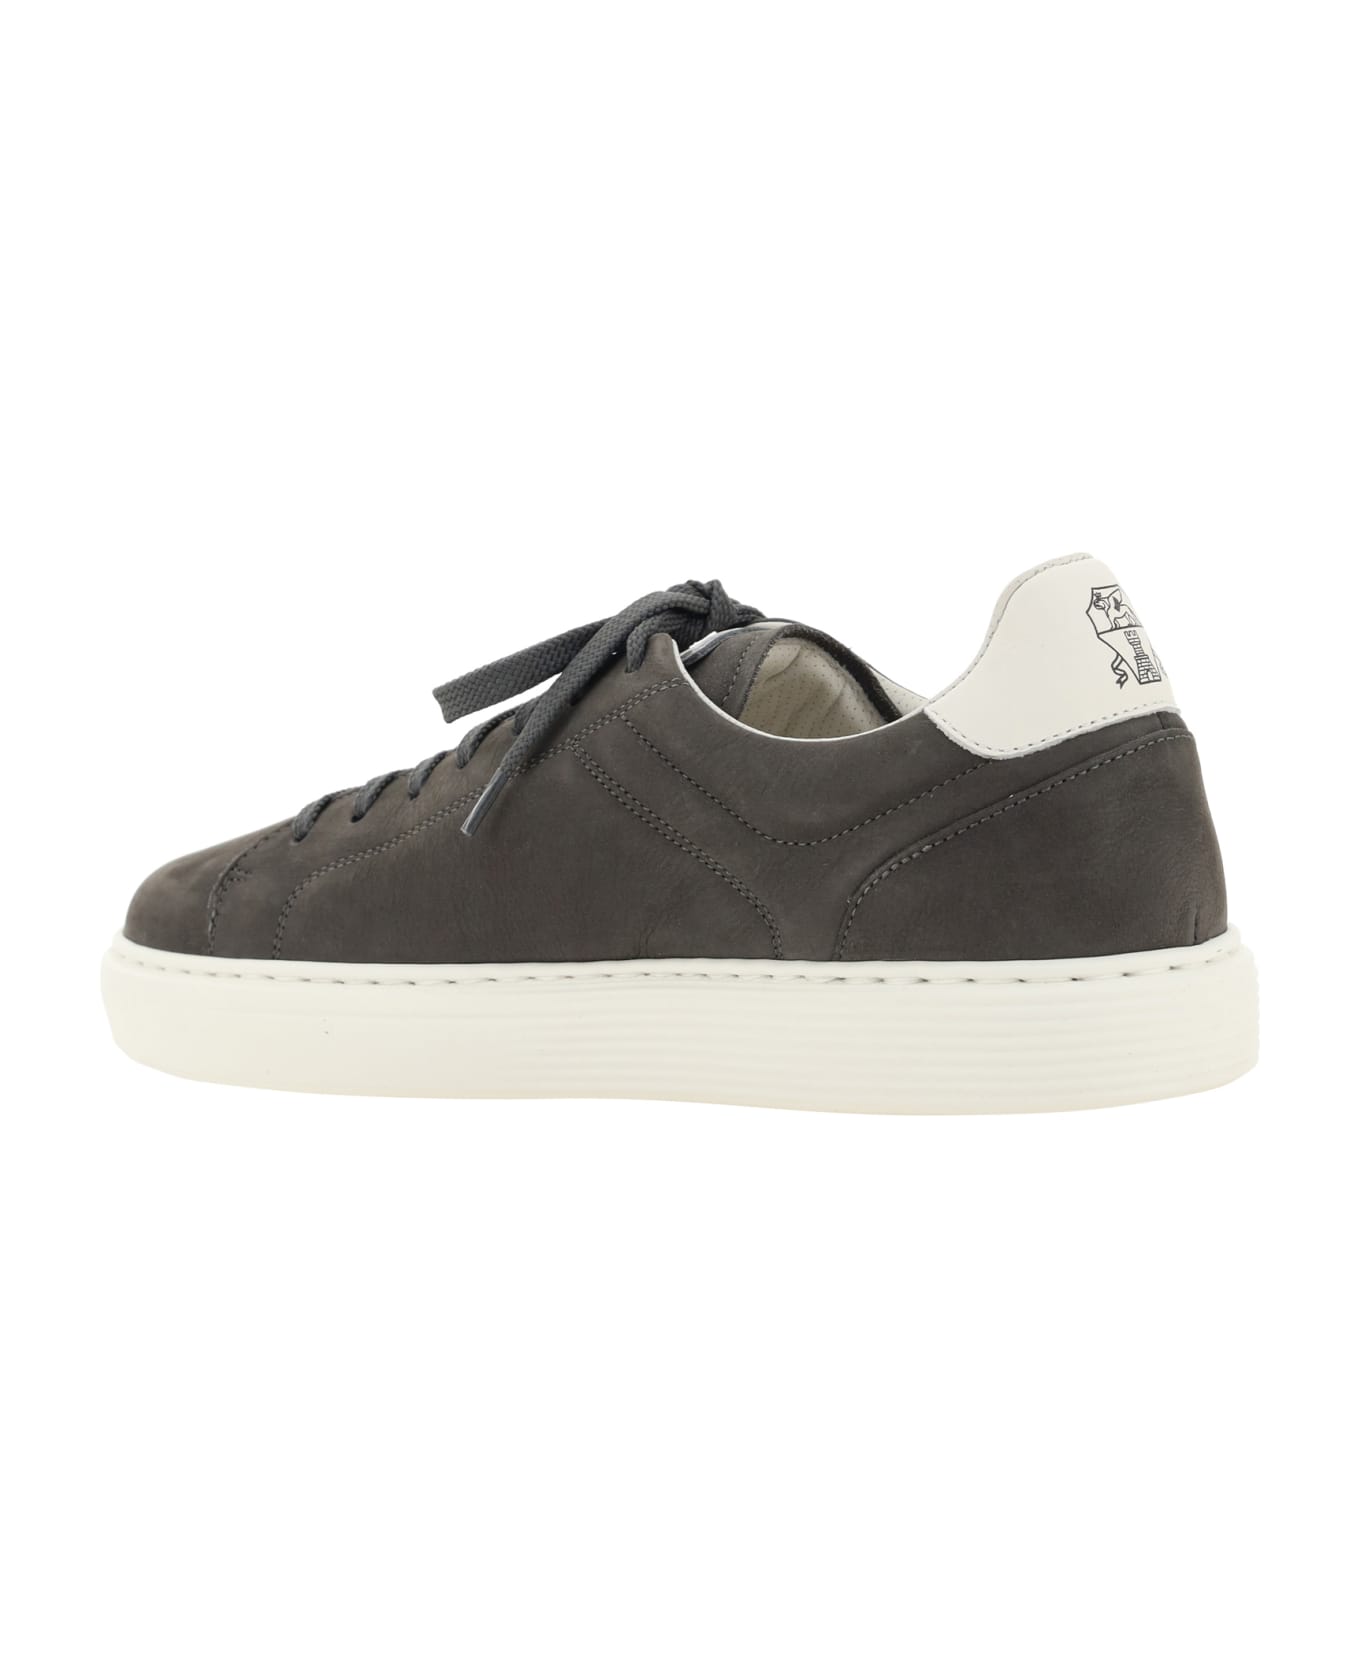 Brunello Cucinelli Nabuk Calfskin Sneakers - Dark Grey